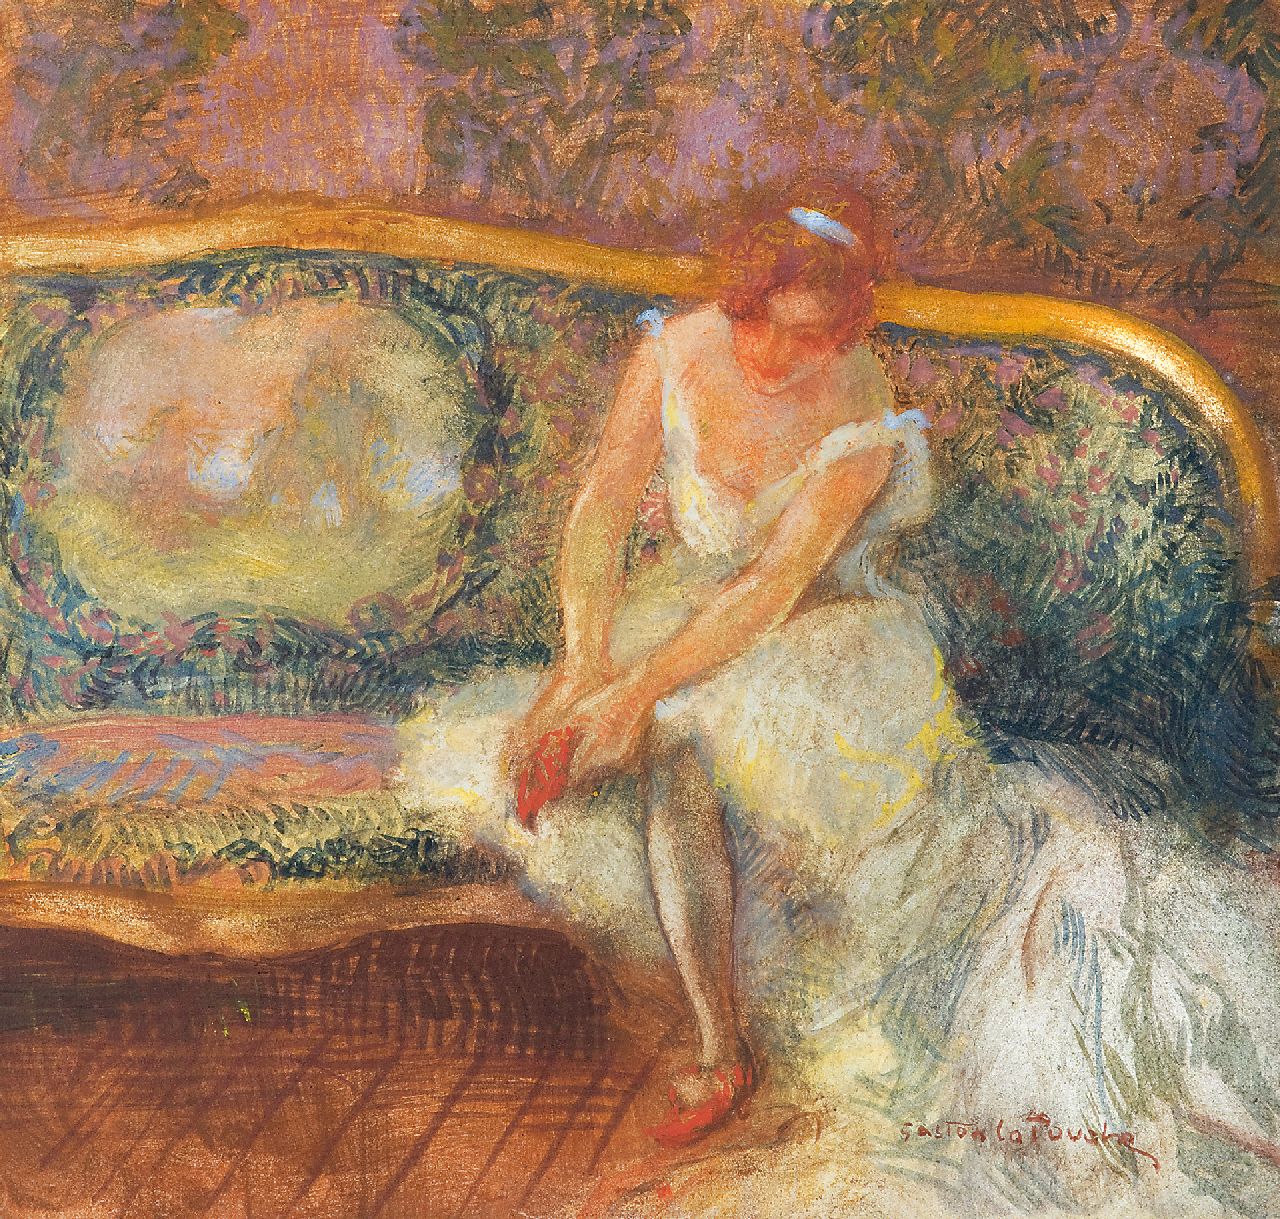 Gaston La Touche | Seated ballerina, crayon and gouache on board, 23.1 x 24.3 cm, signed l.r.